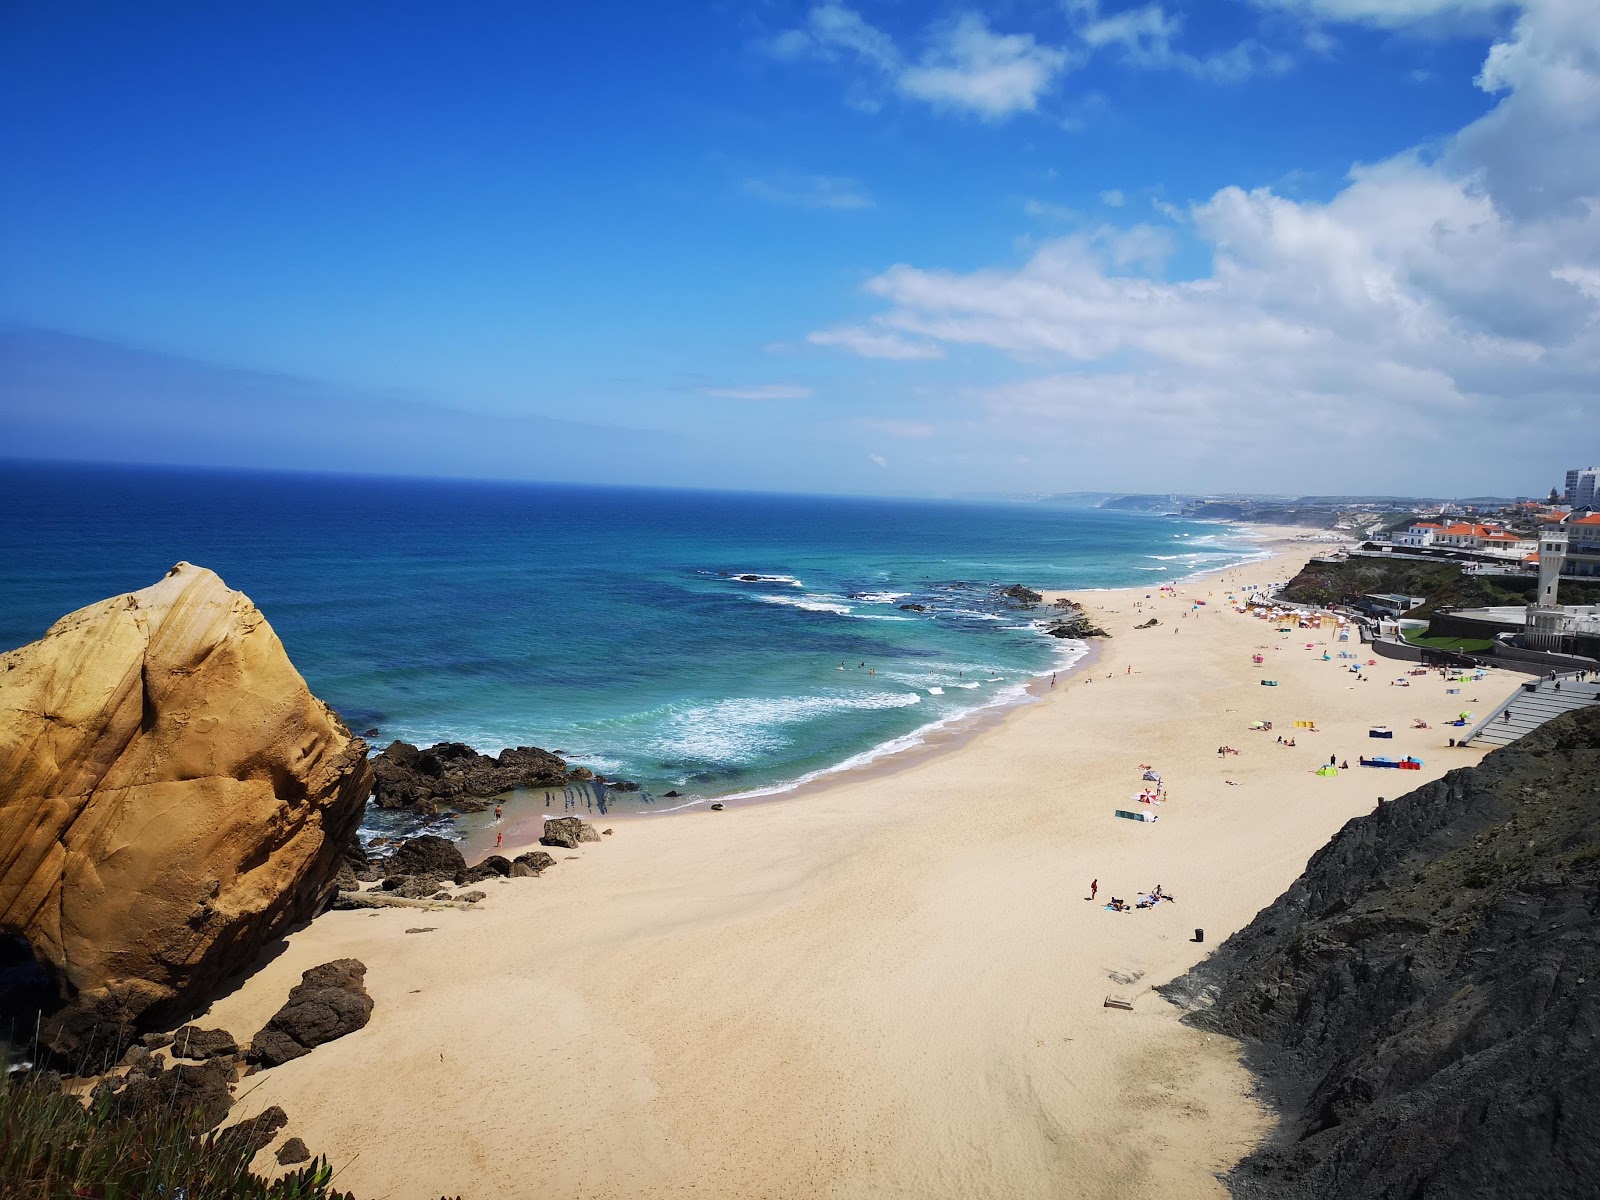 Photo of Praia de Santa Cruz with turquoise water surface